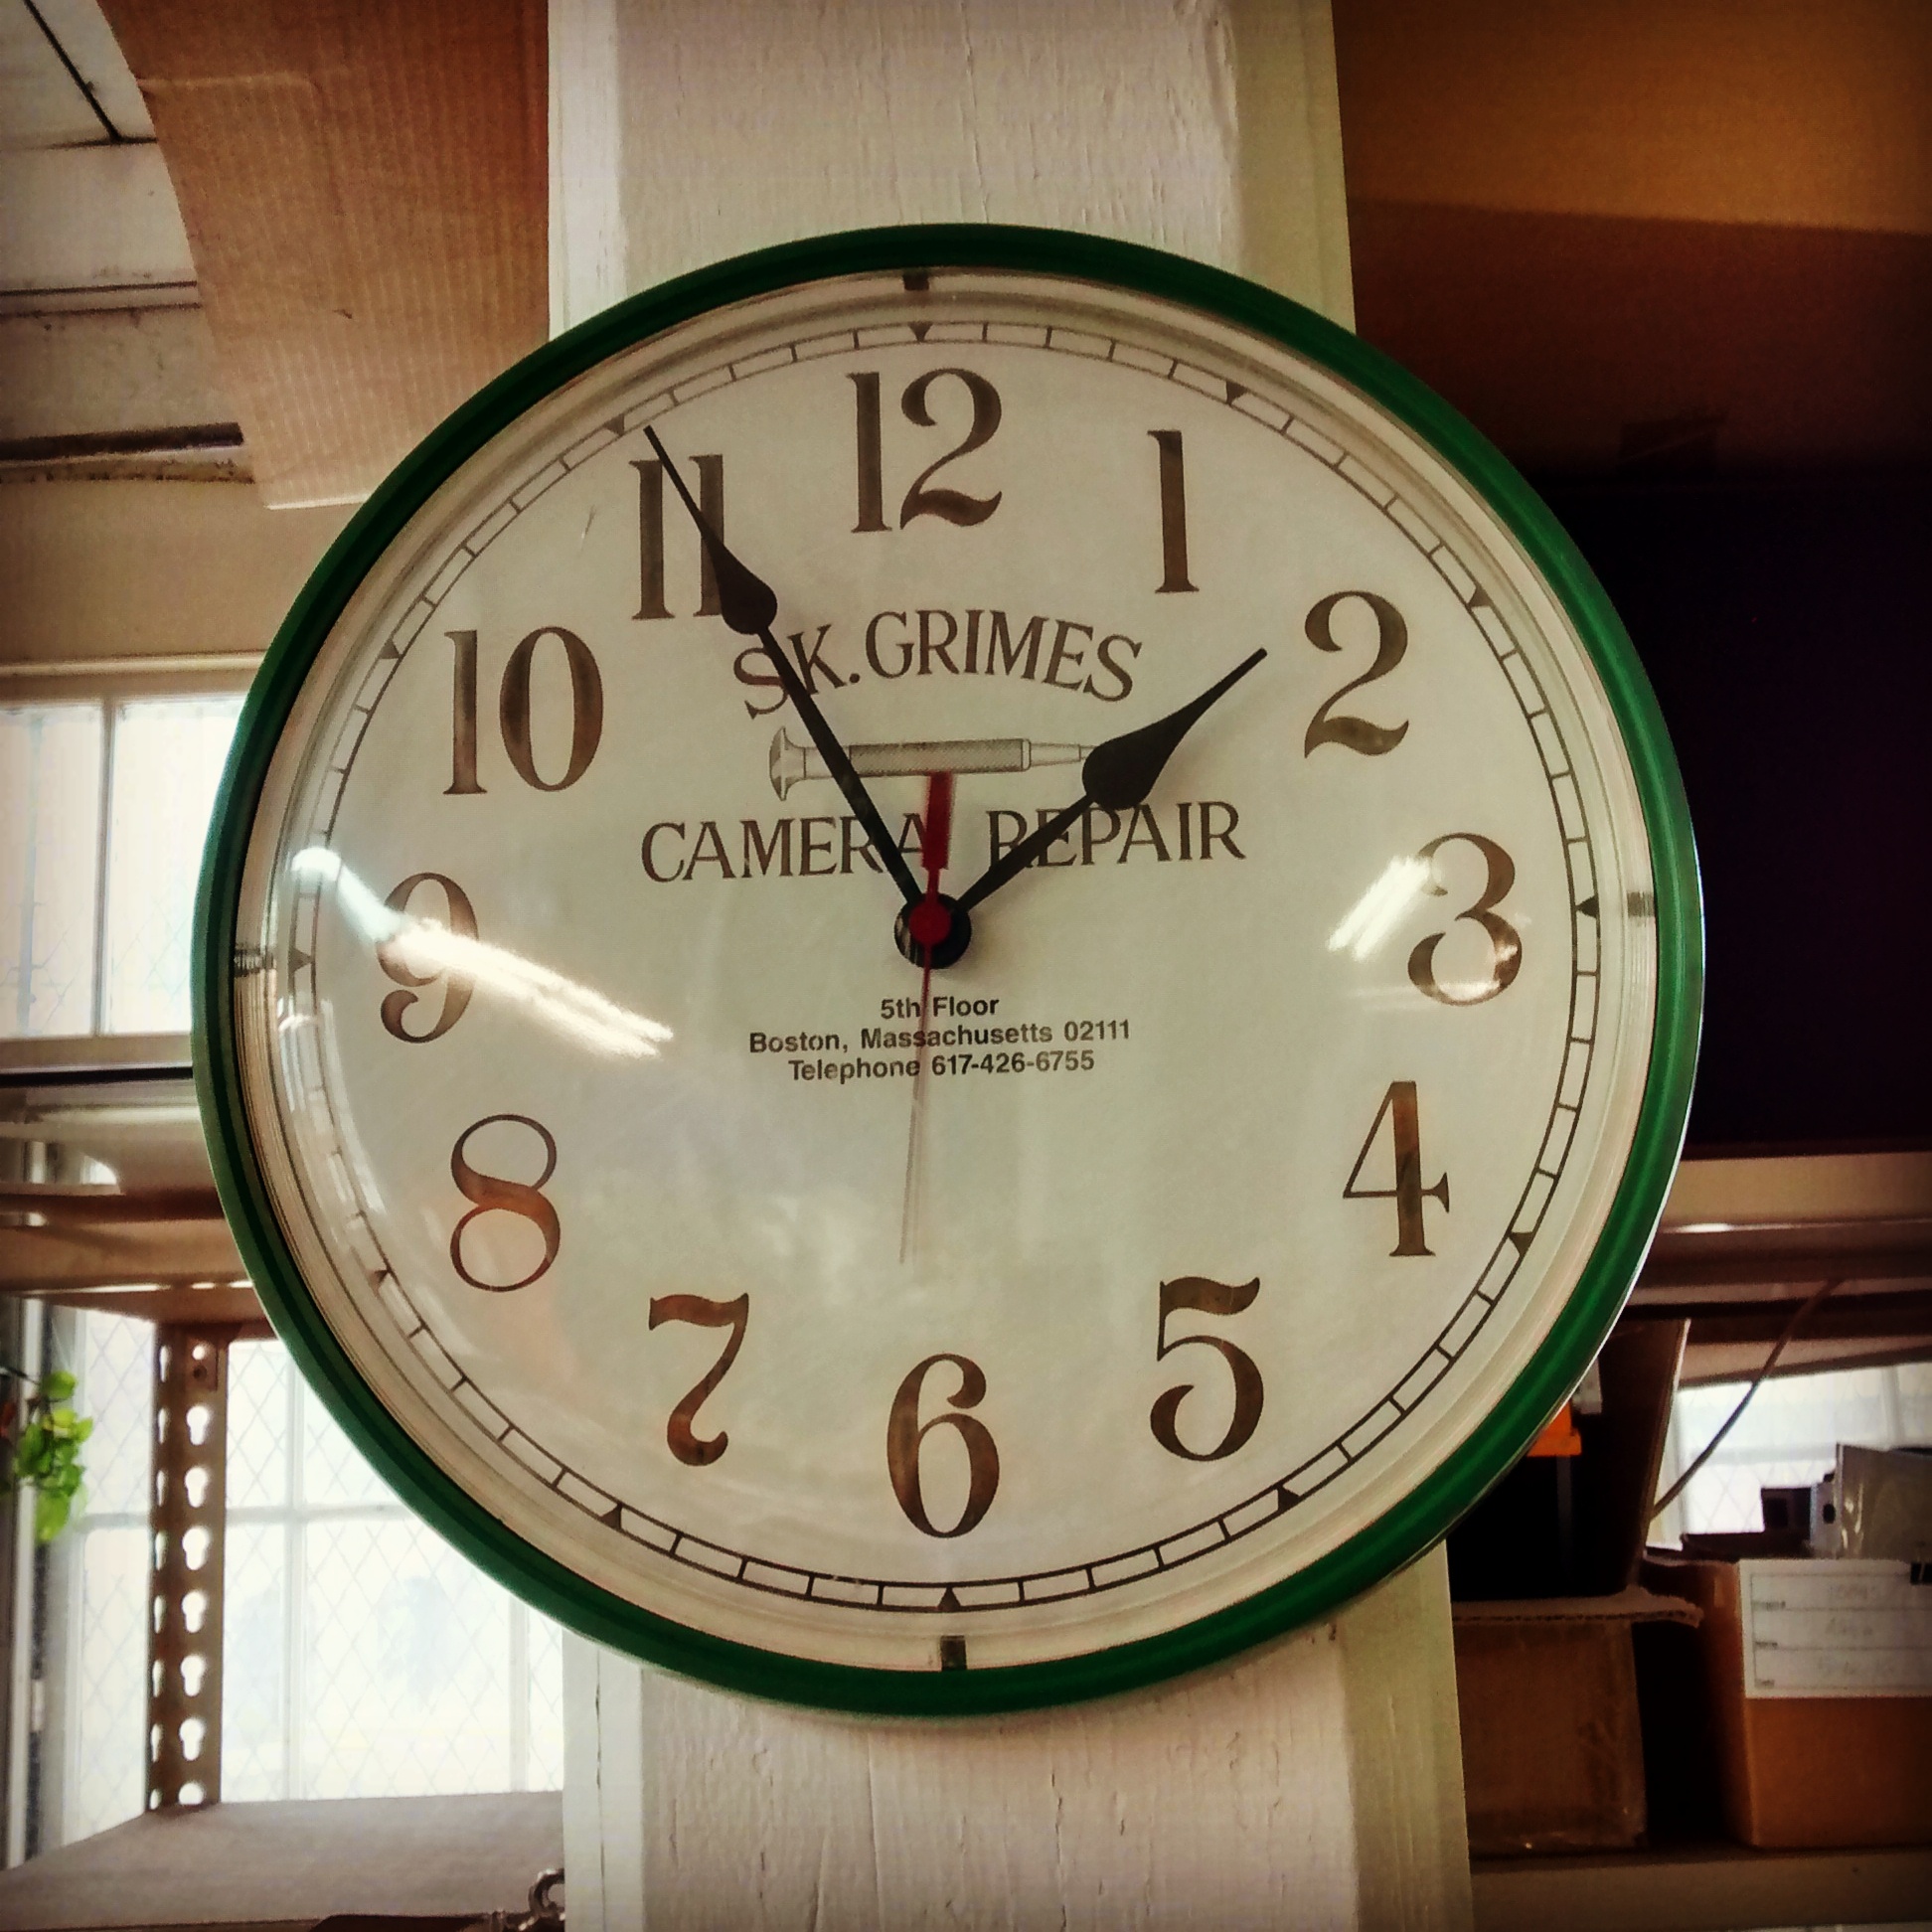 The Clock, S.K. Grimes Camera Repair